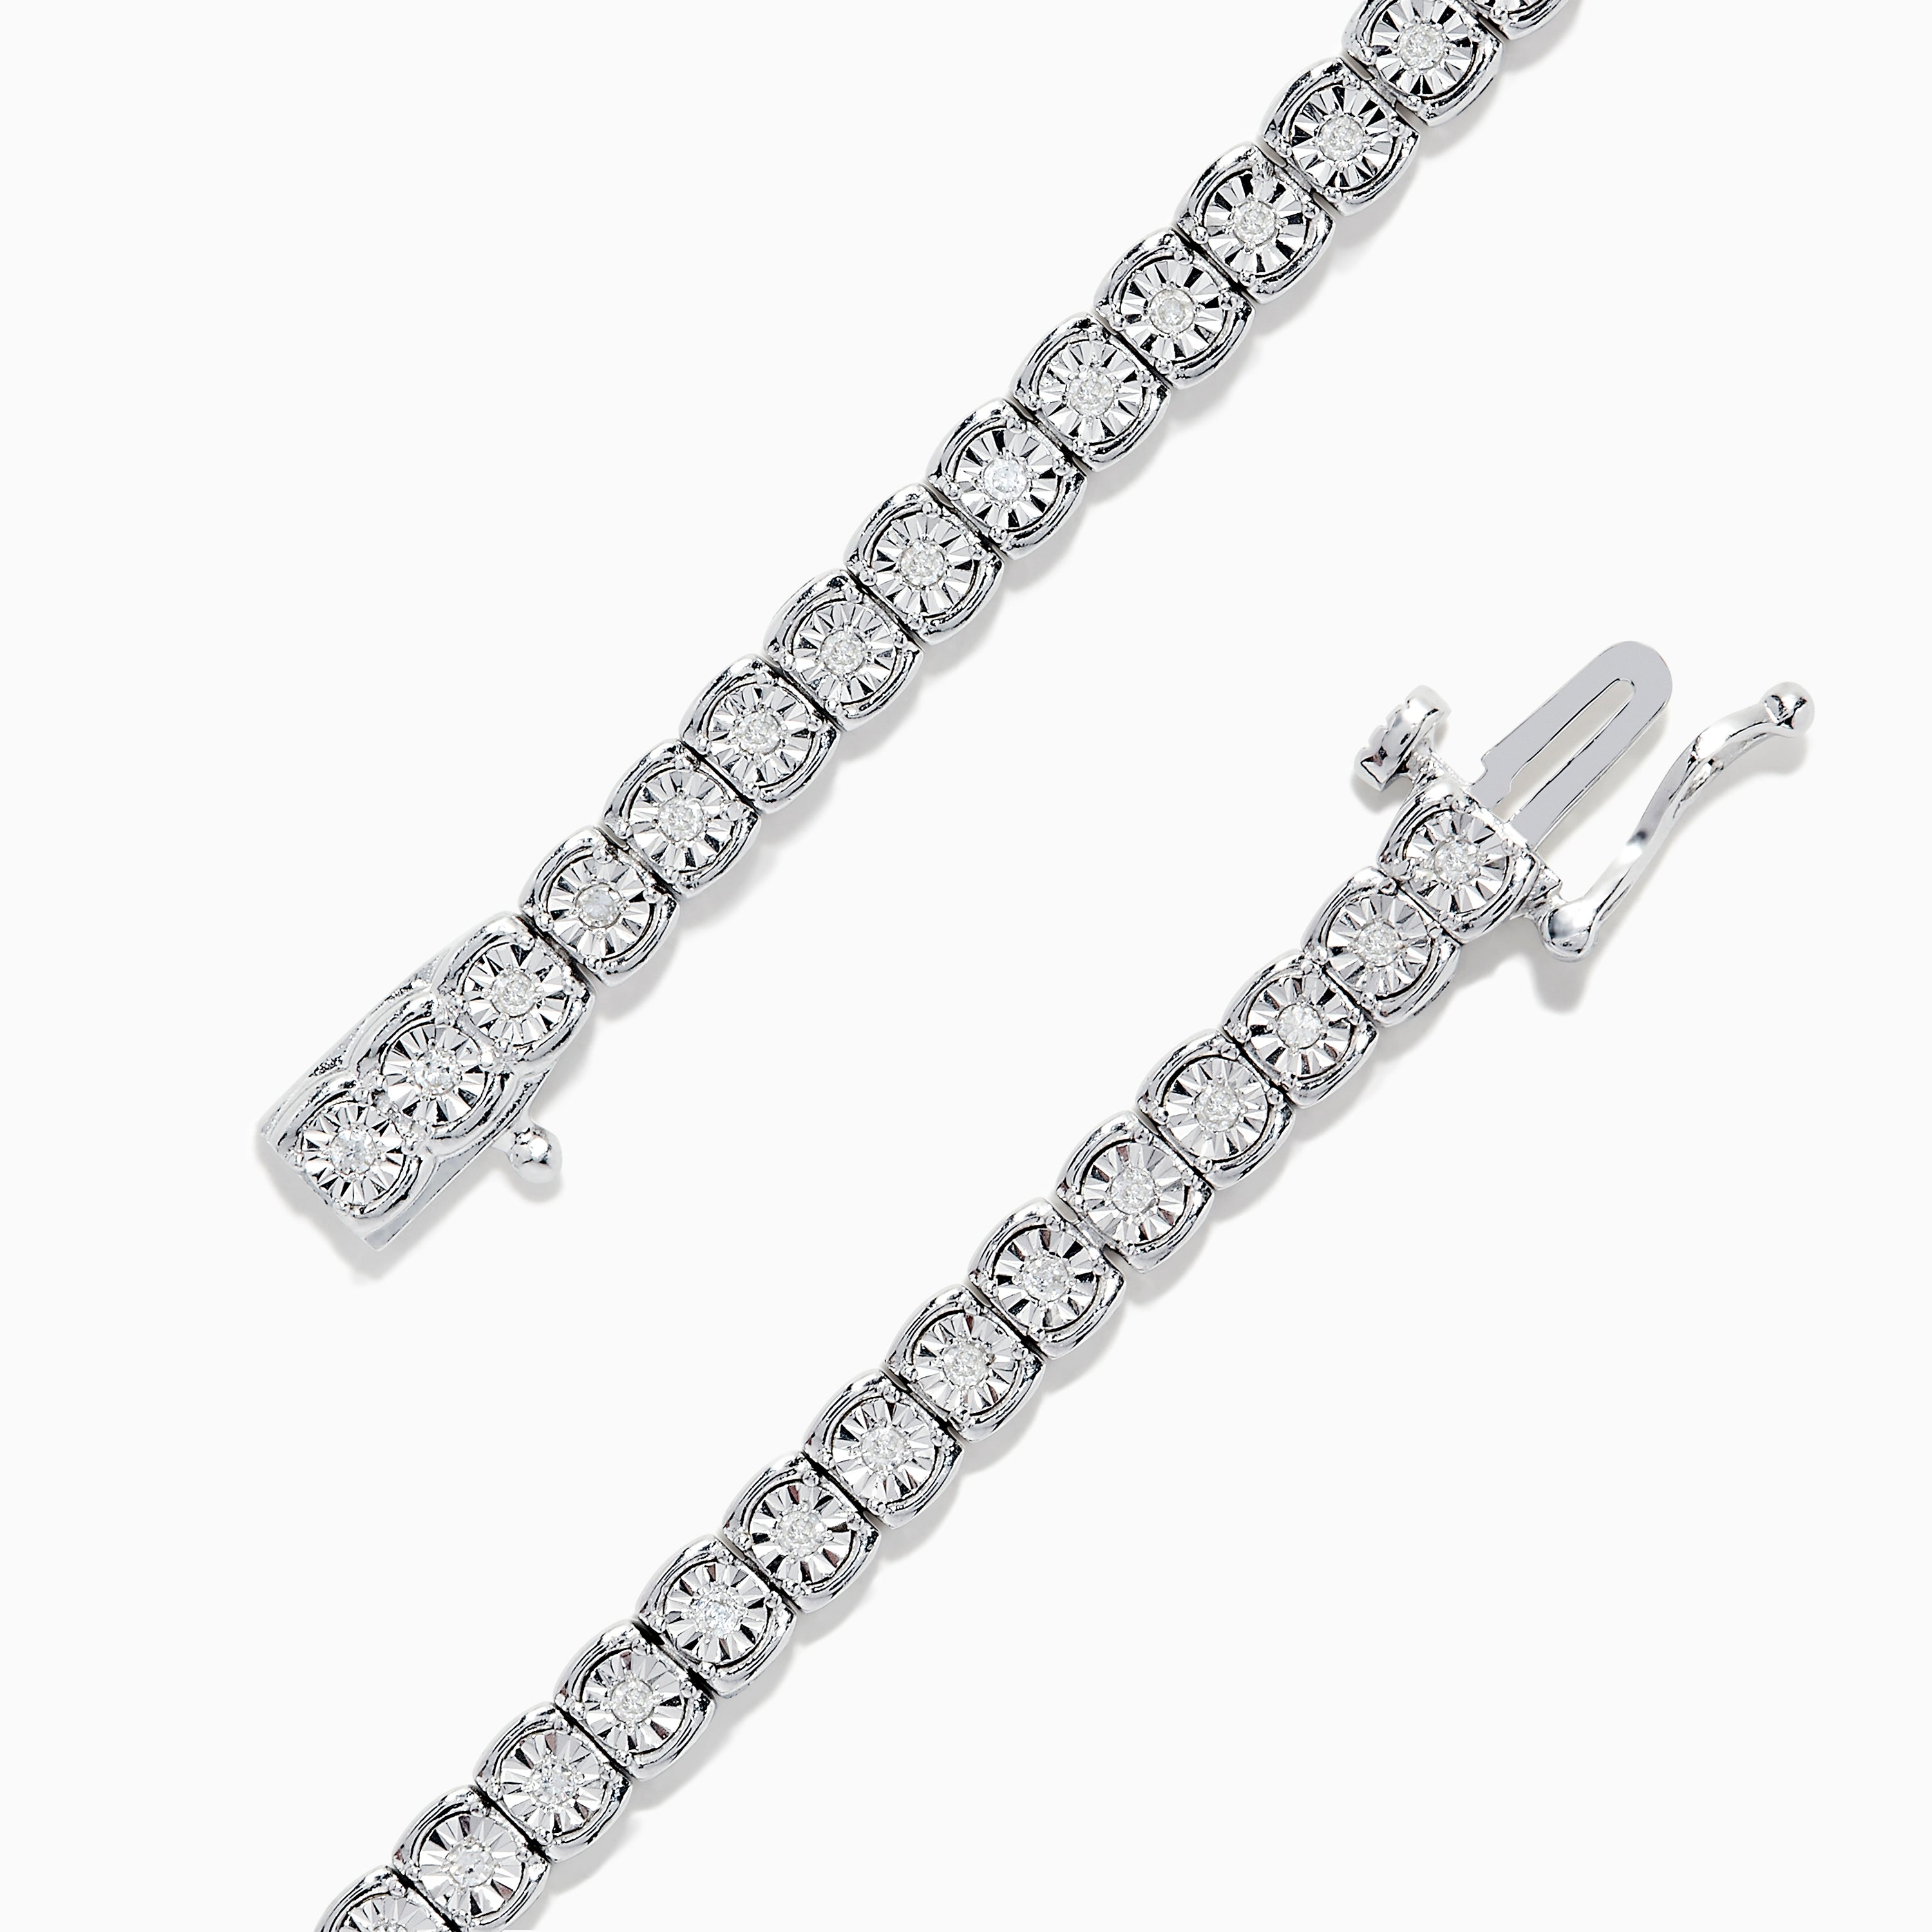 Ornate Jewels Bangle Bracelets And Cuffs  Buy 925 Sterling Silver American  Diamond Adjustable Tennis Bracelet for Women Girls Adjustable OnlineNykaa  Fashion